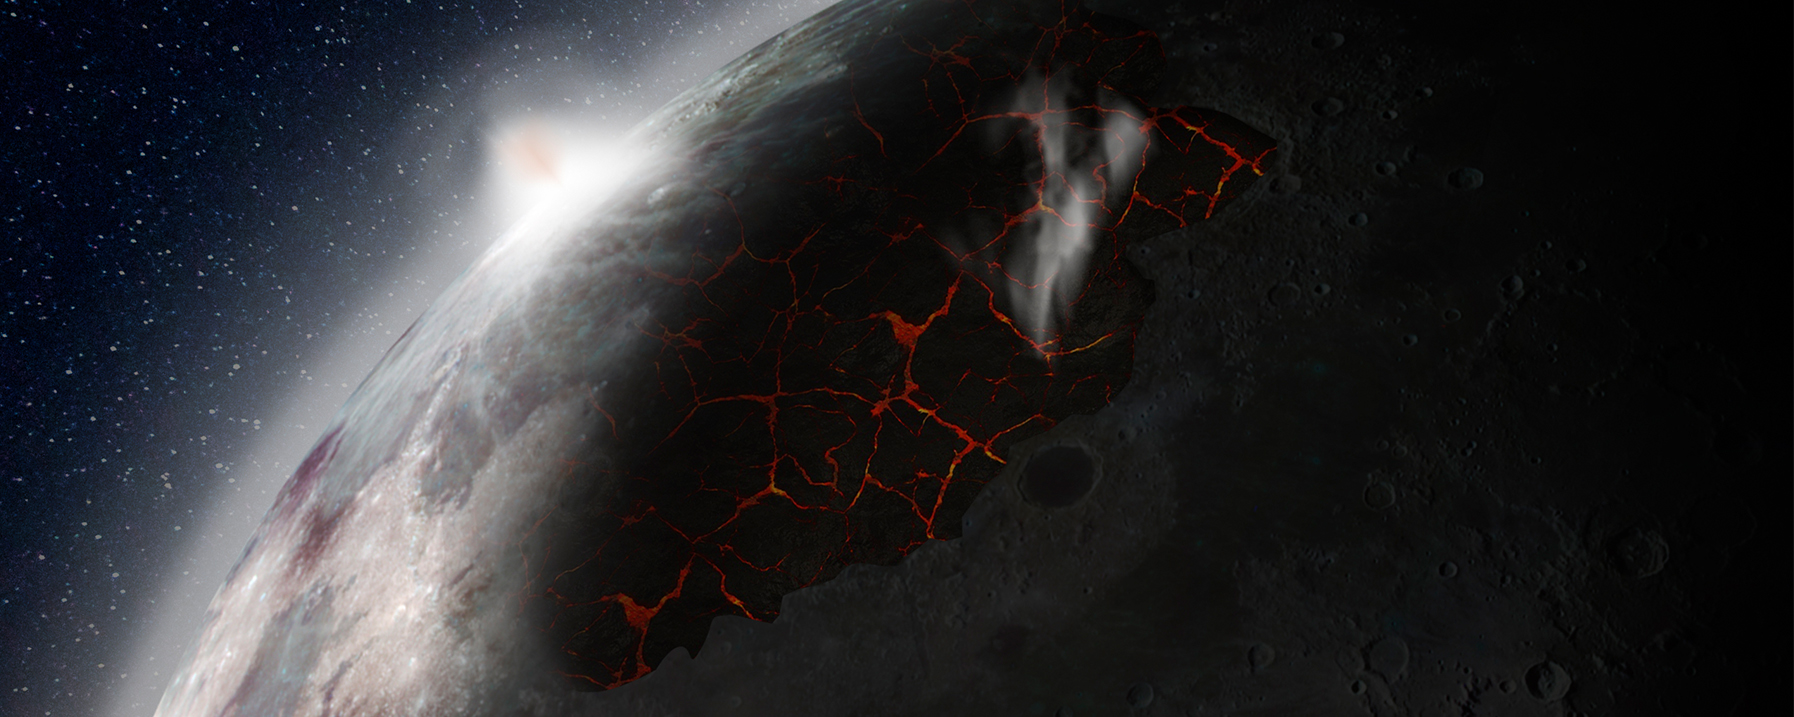 Artist's illustration of volcanic activity on the Moon billions of years ago.